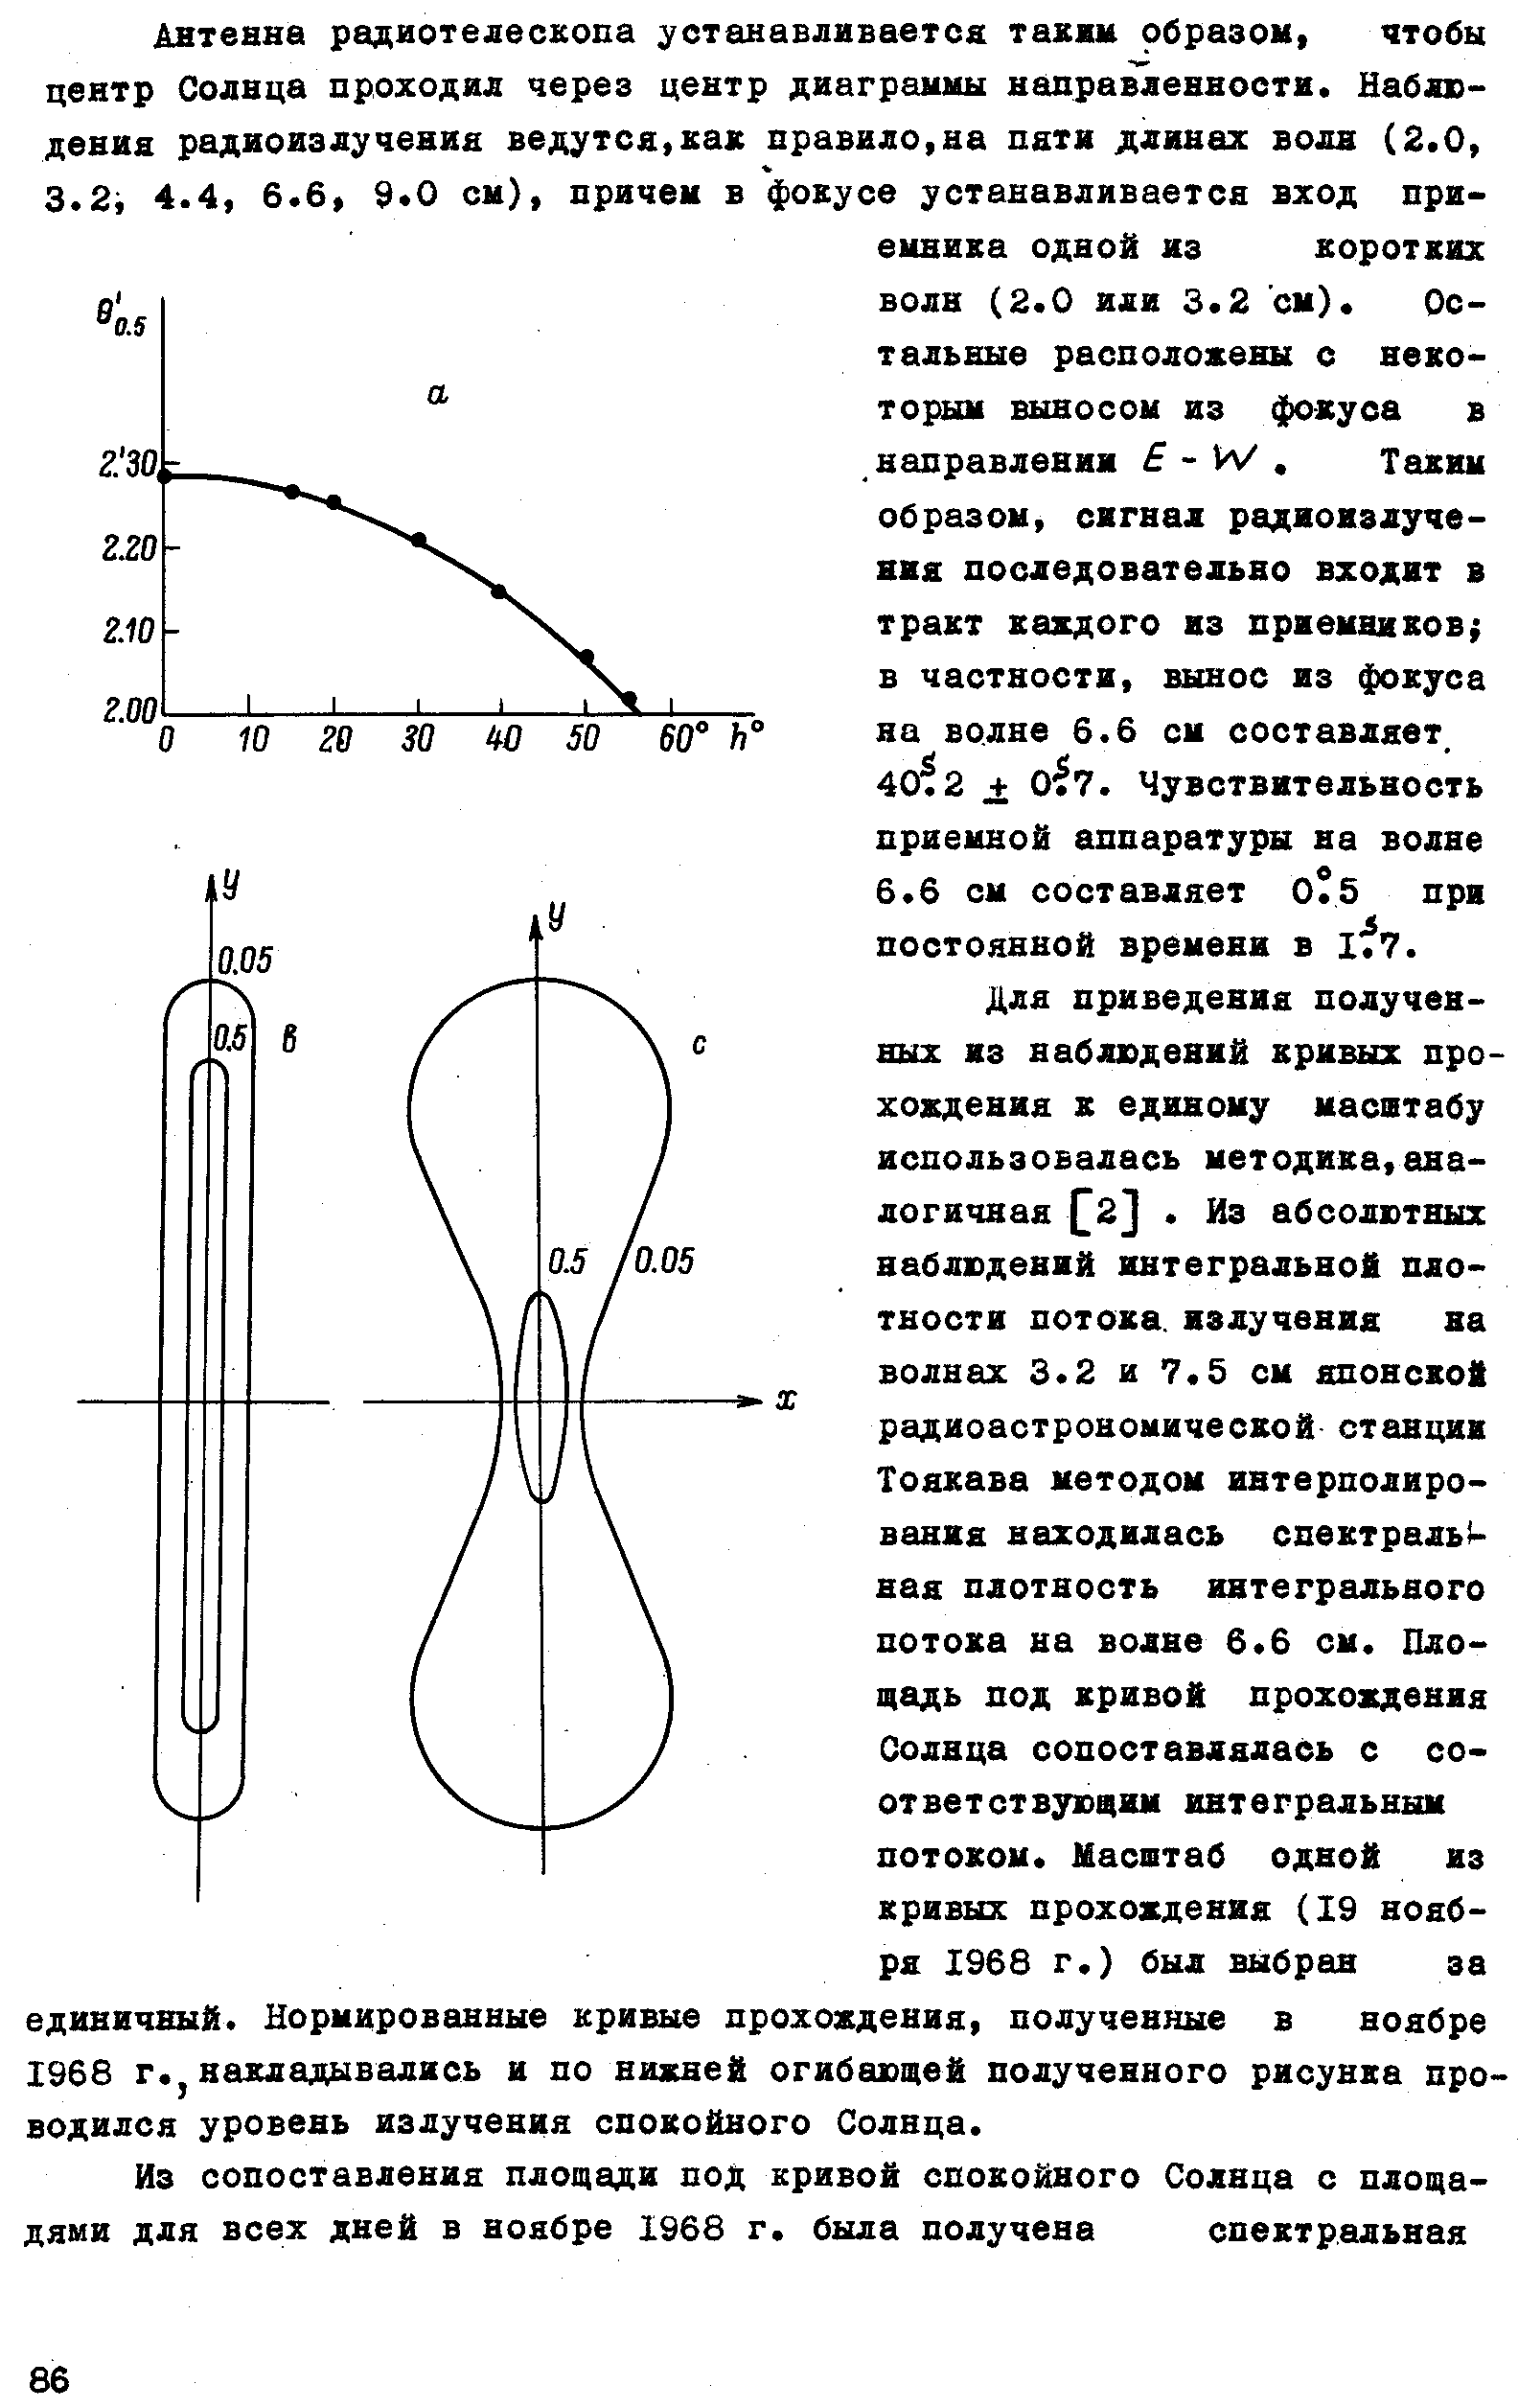 Ихсанова В.Н.,стр.2